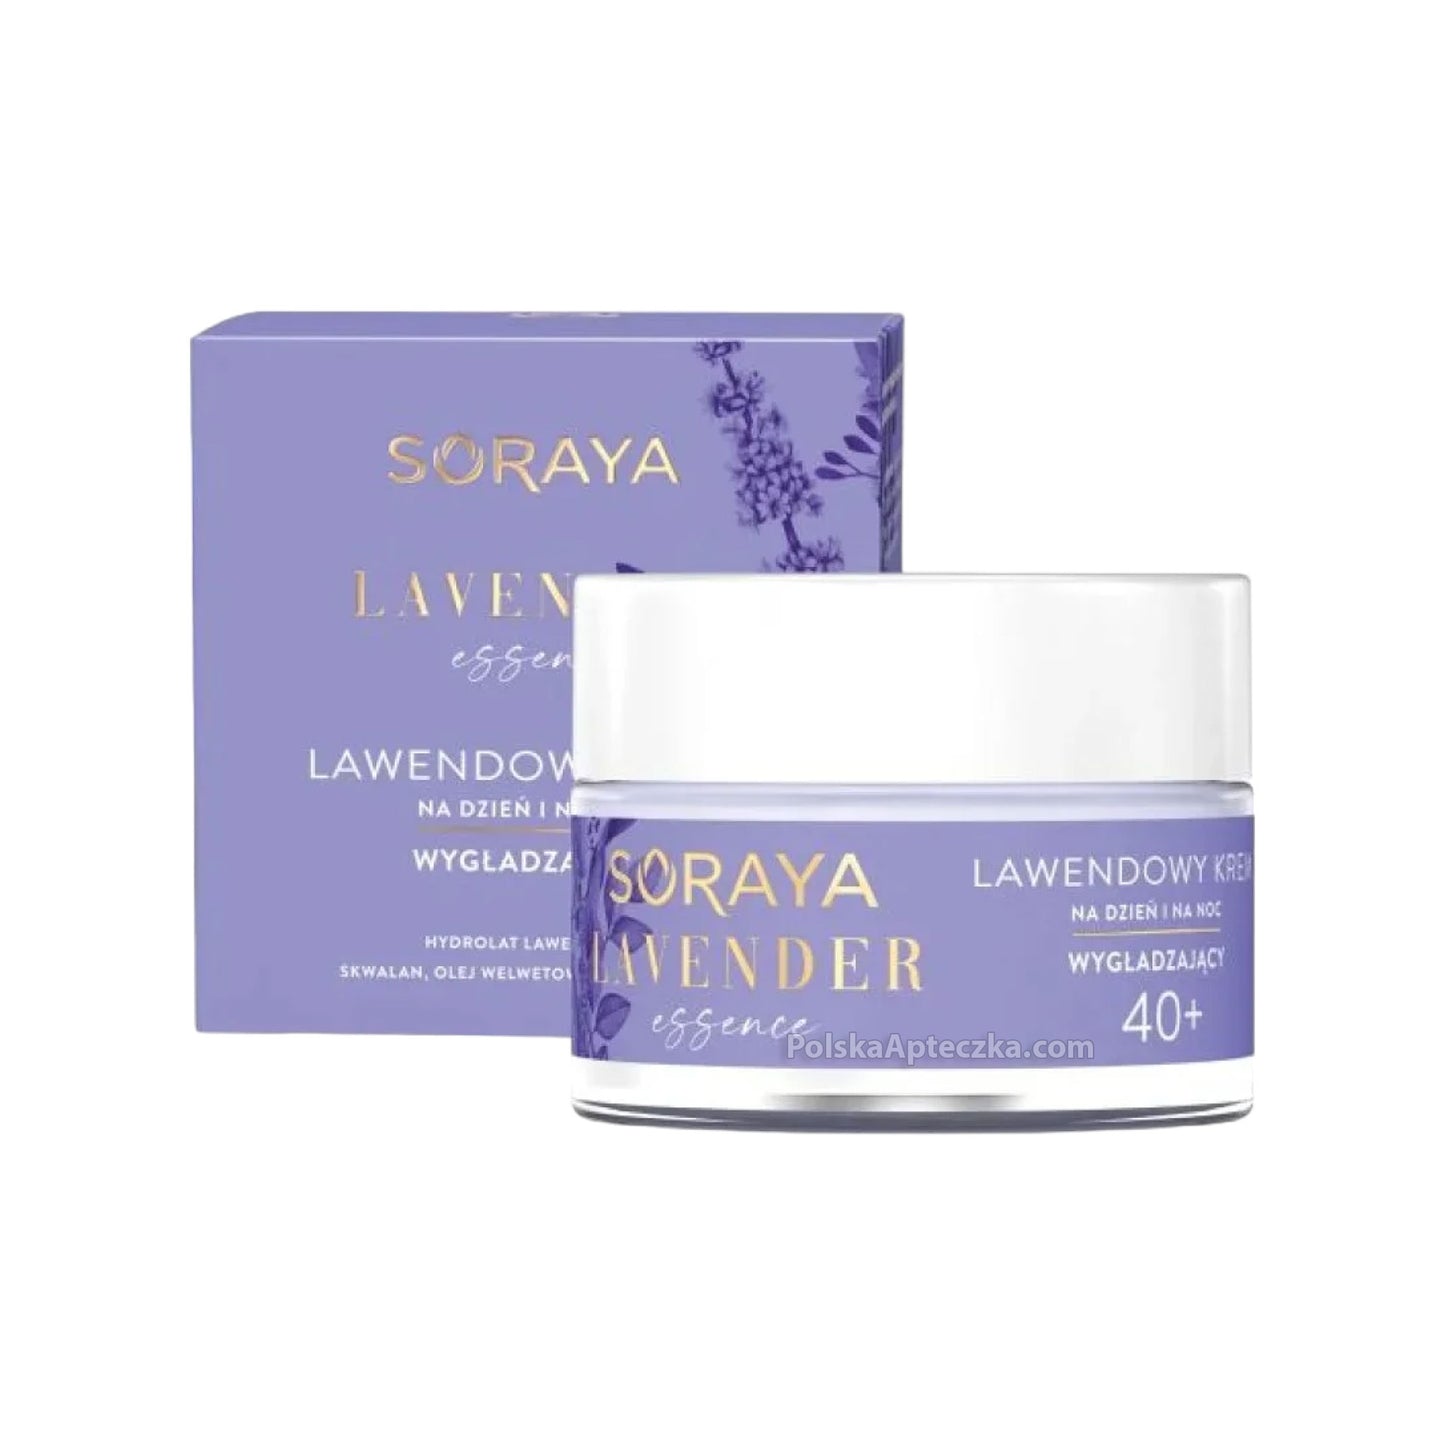 Soraya, Lavender Essence 40+ lavender smoothing cream for day & night 50ml